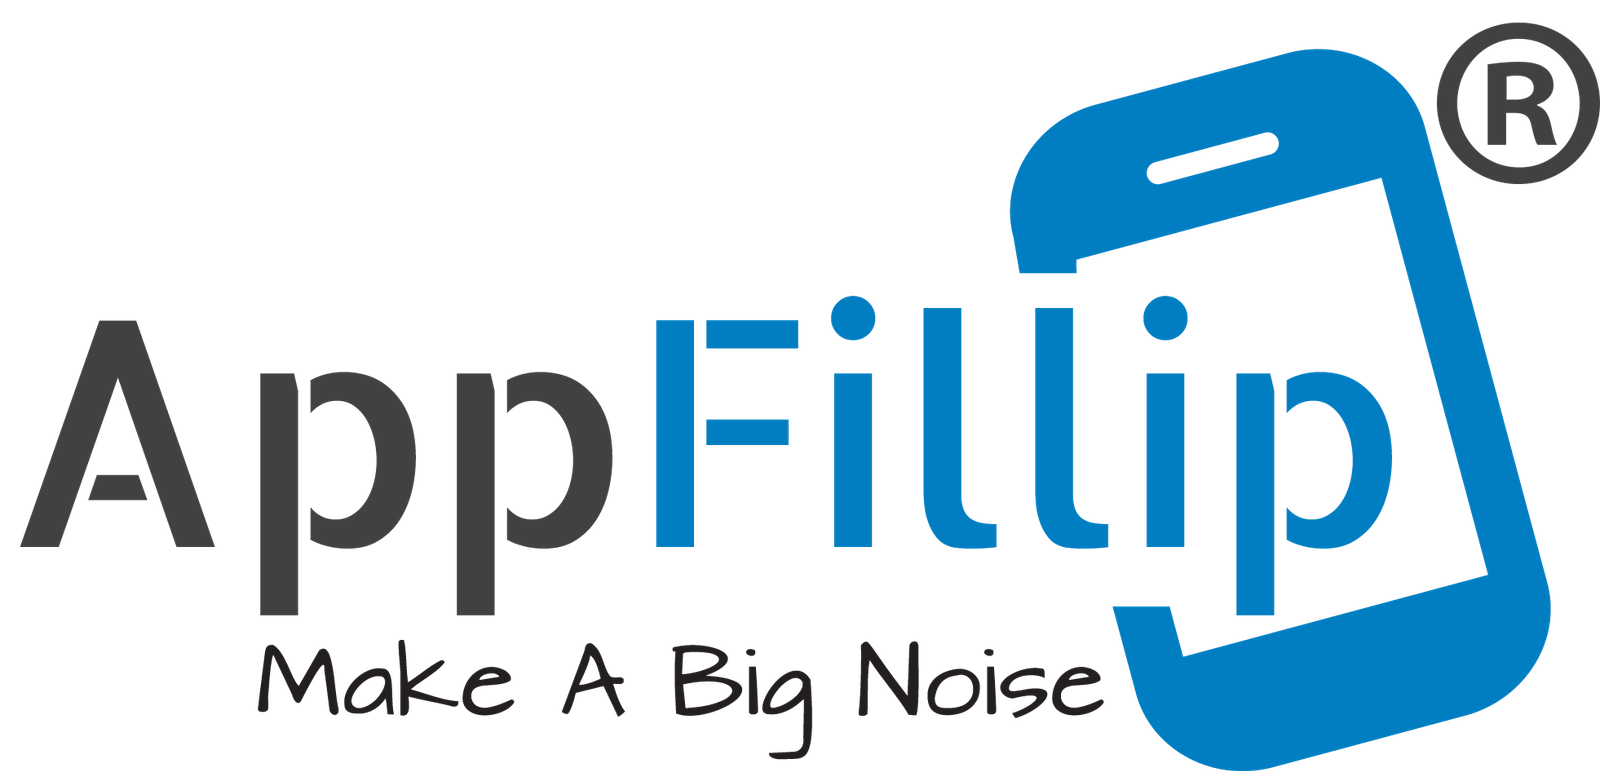 AppFillip Mobile App Marketing Agency